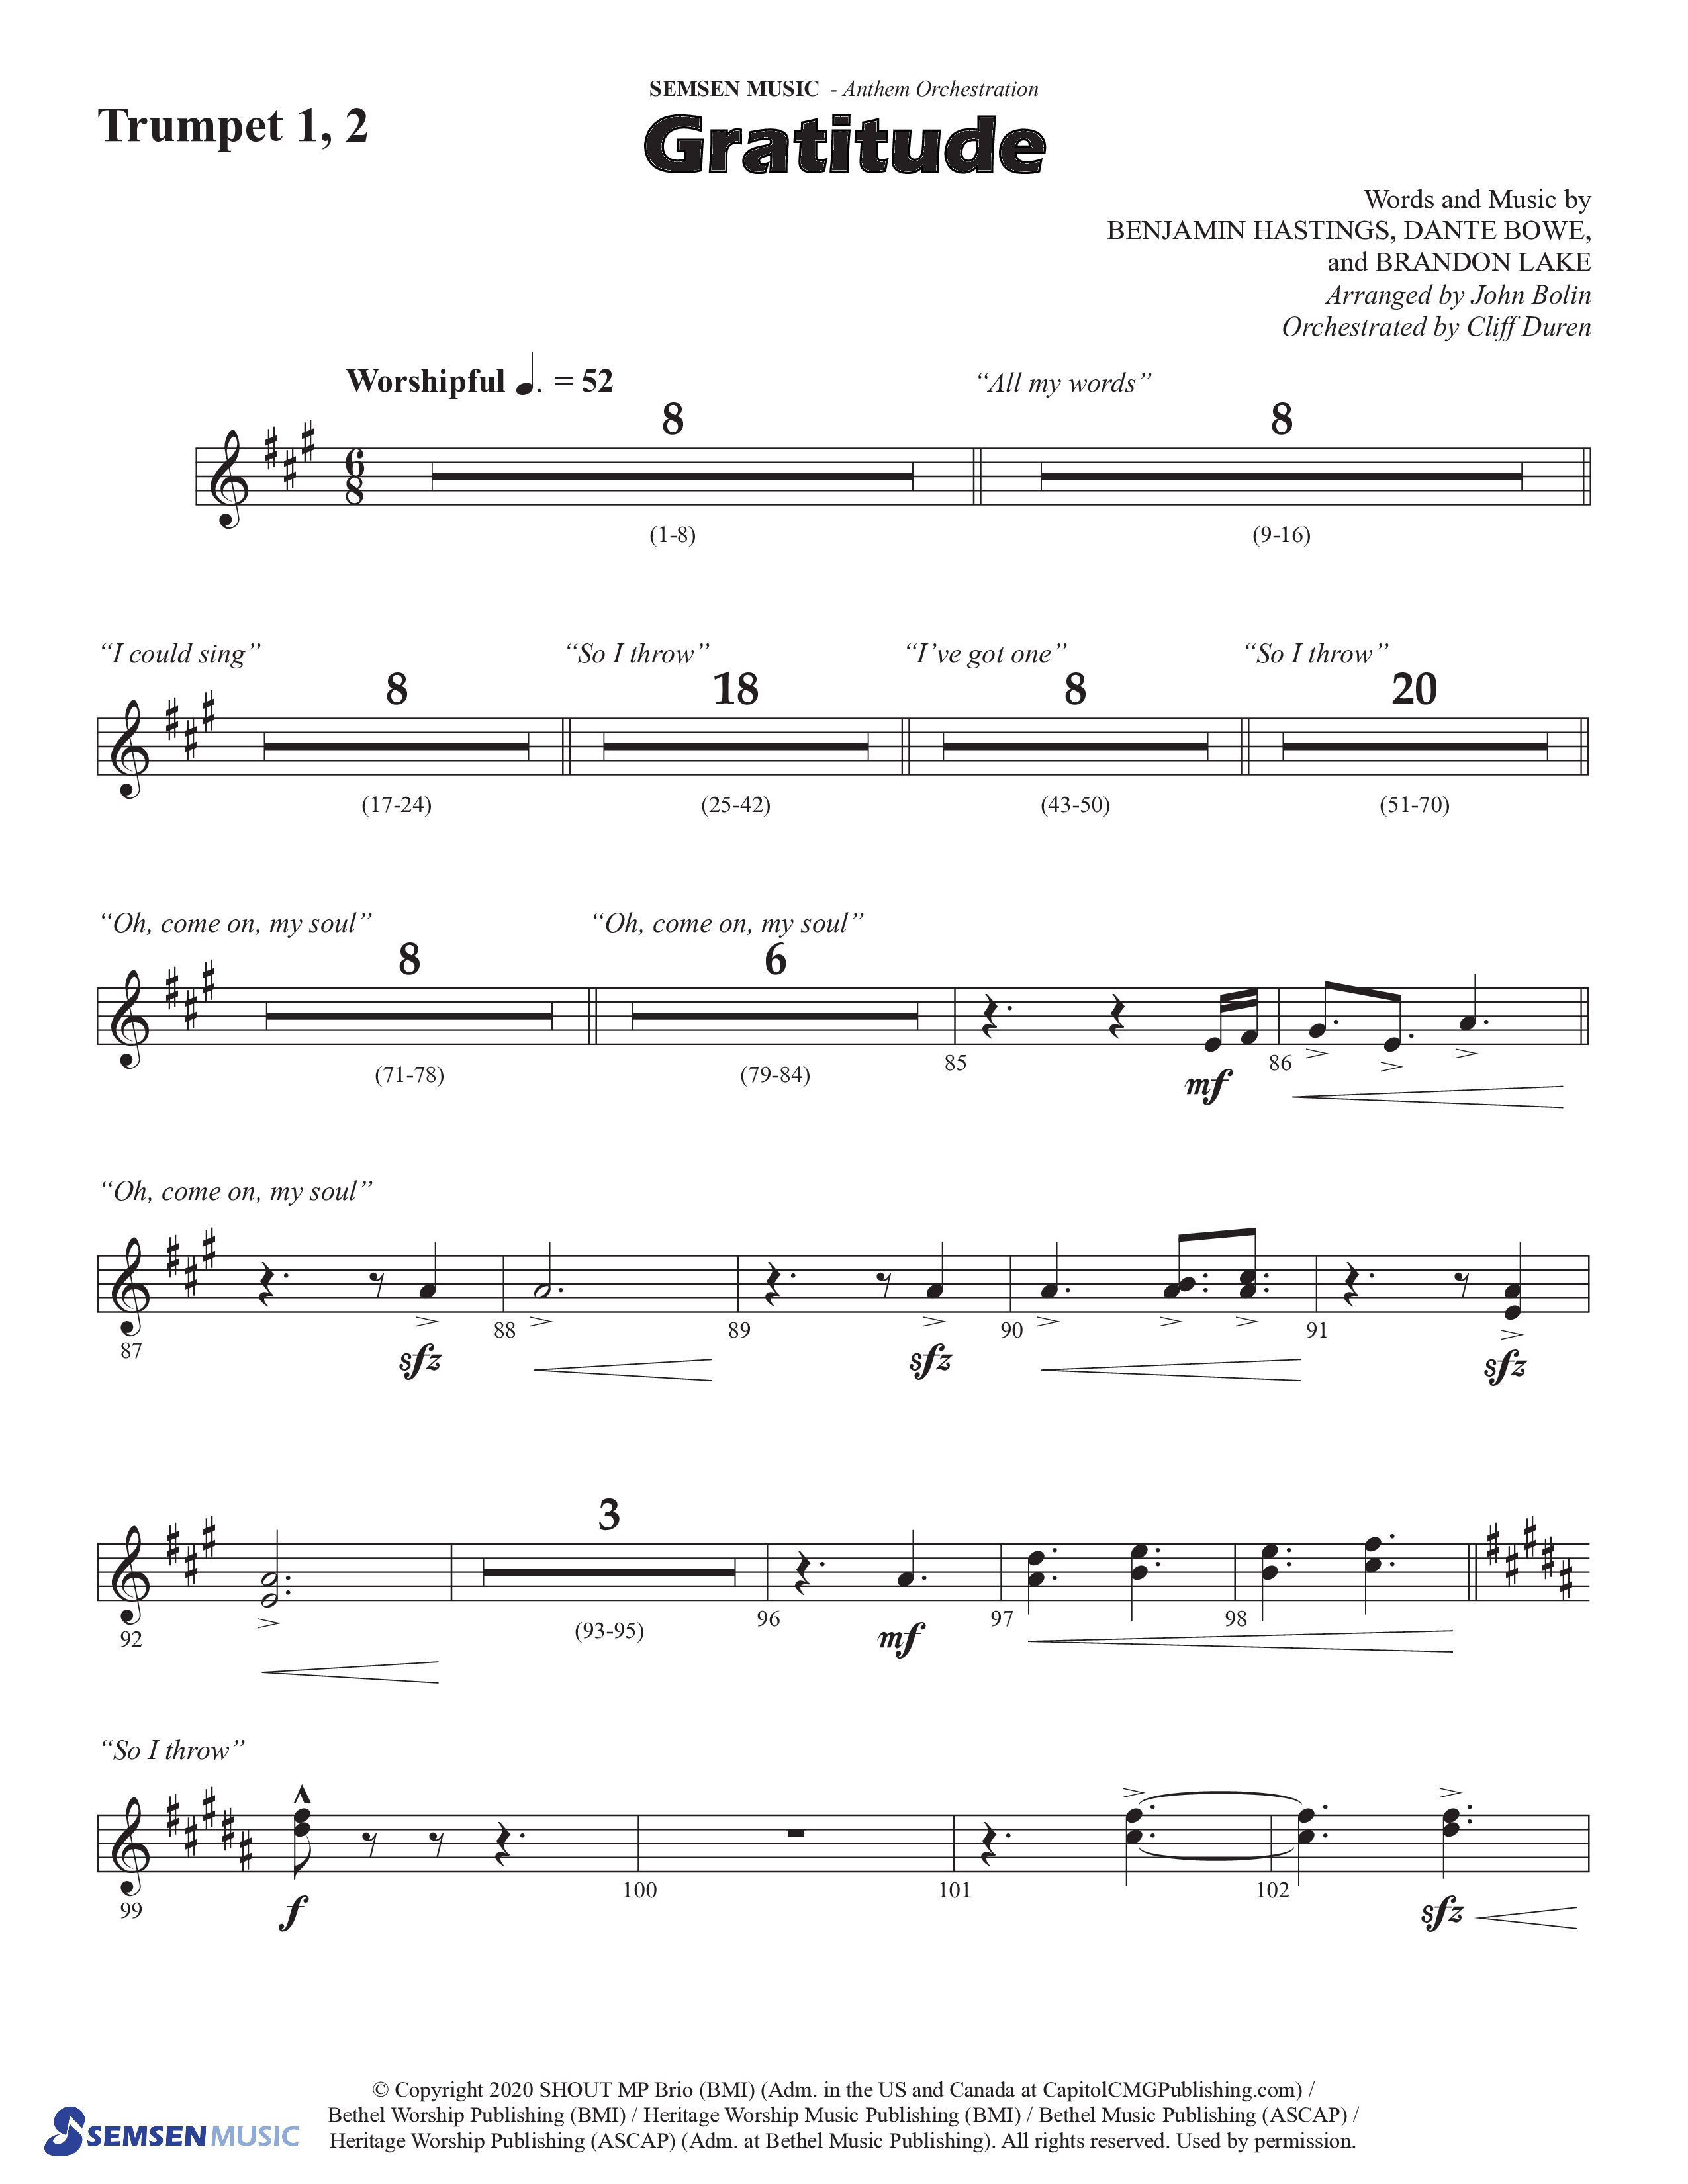 Gratitude (Choral Anthem SATB) Trumpet 1,2 (Semsen Music / Arr. John Bolin / Orch. Cliff Duren)